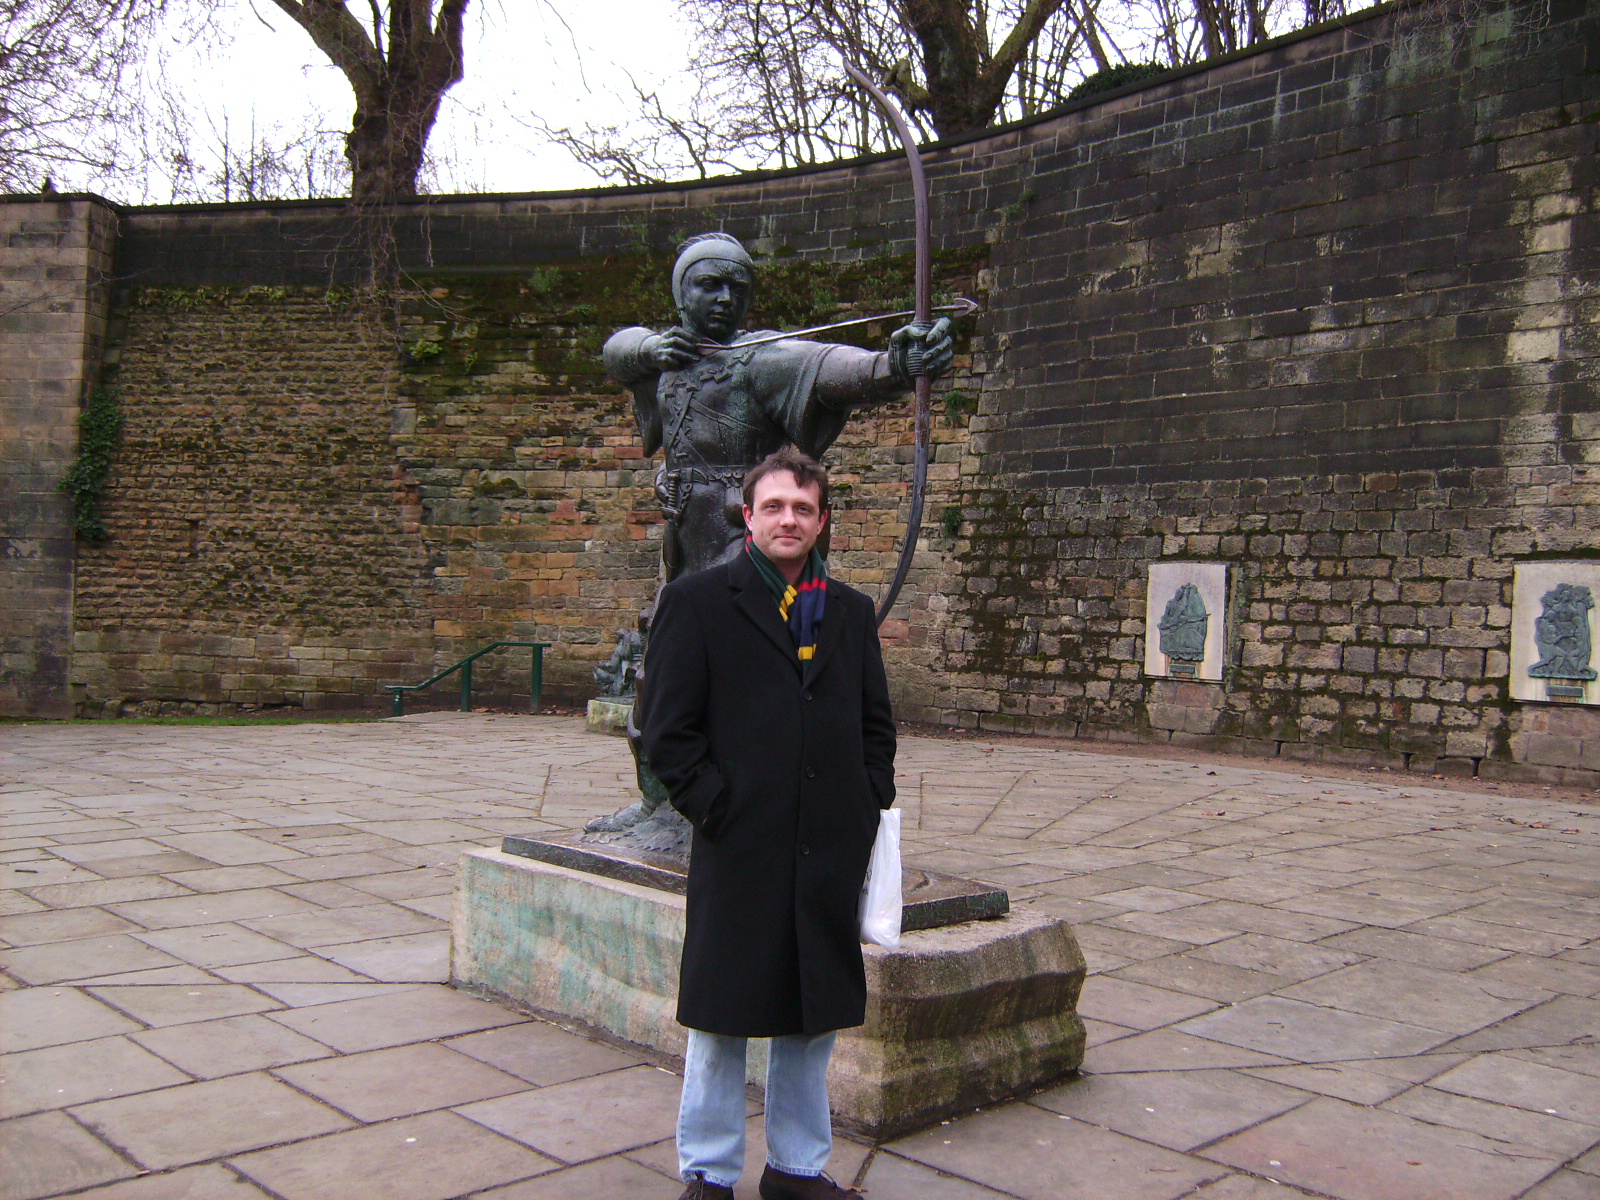 With Robin Hood - Nottingham, England